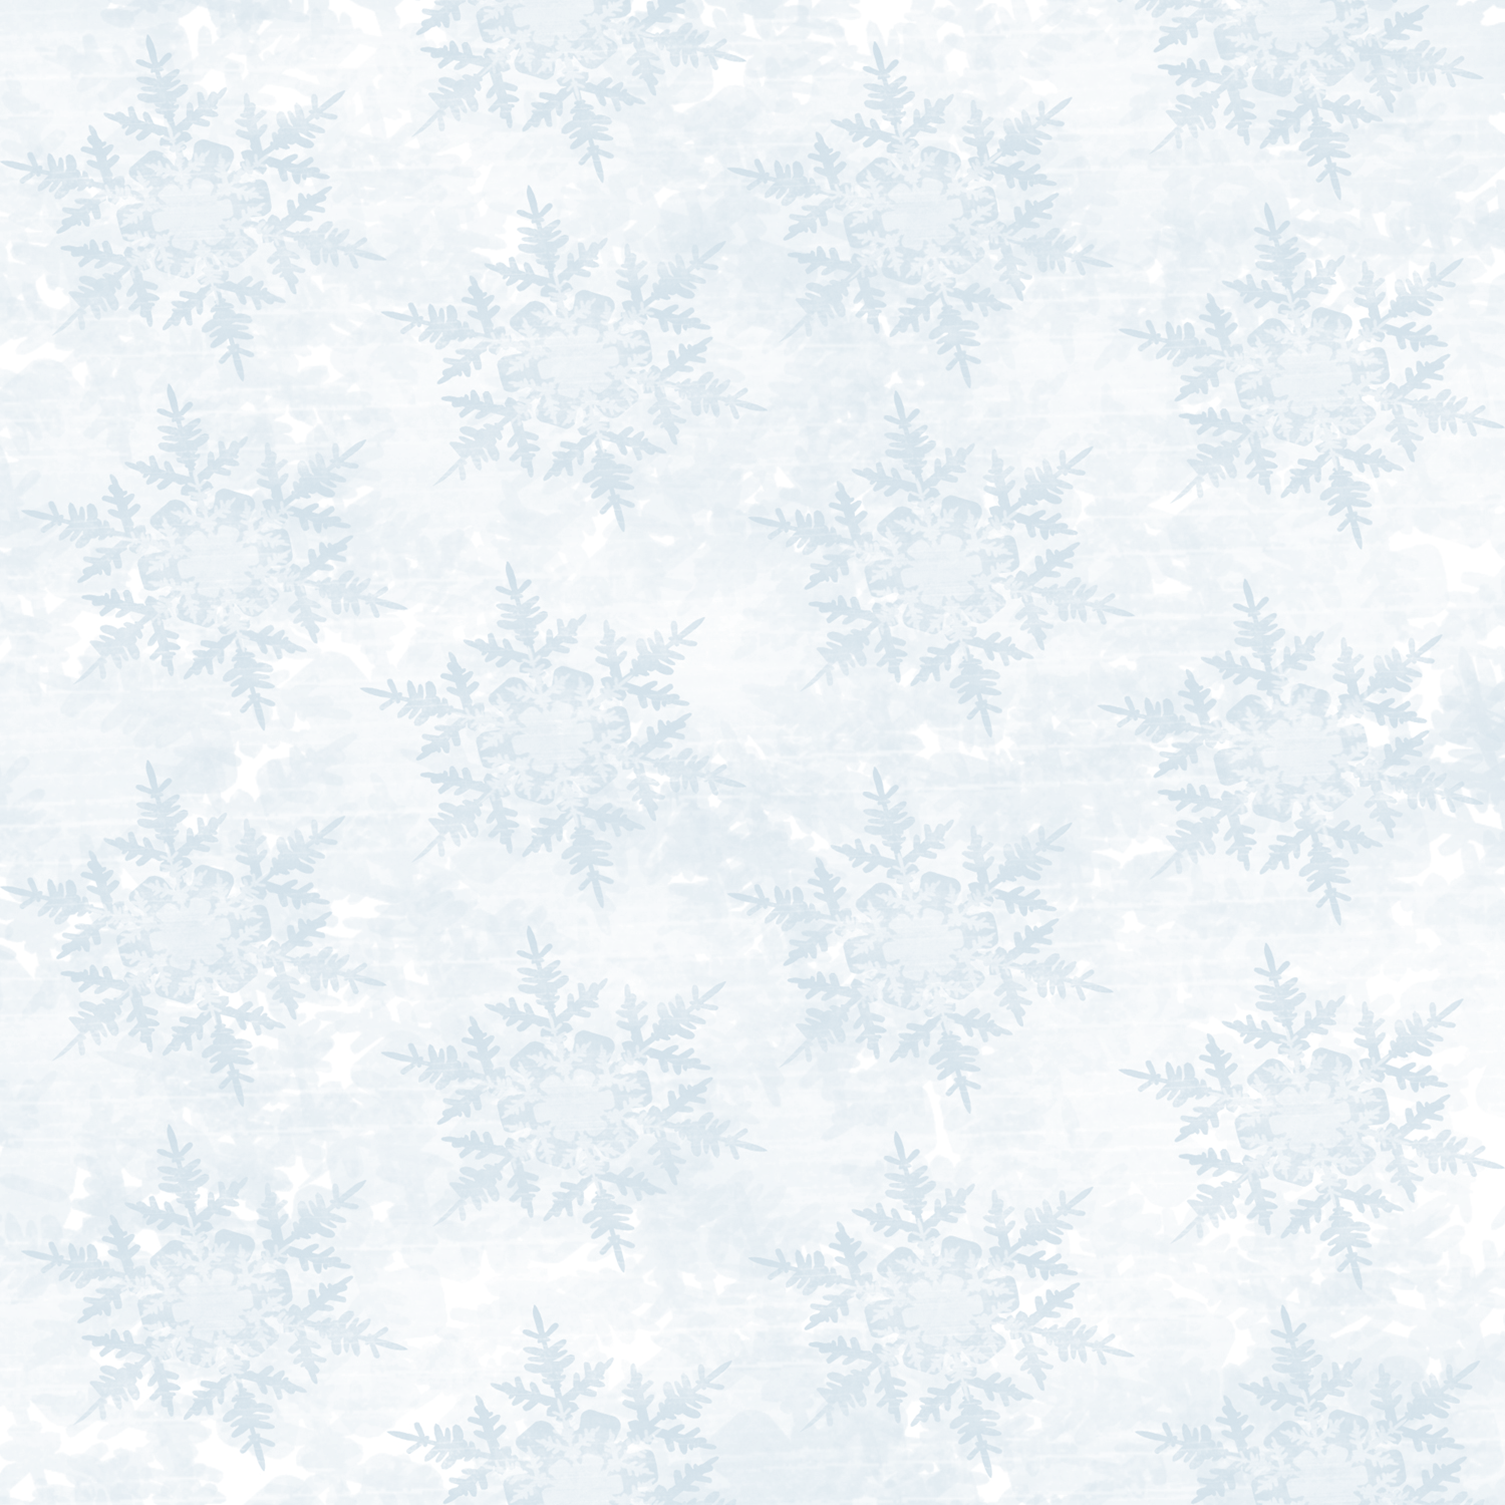 Snowflake Background Png Snowflake Background Clip Art Library